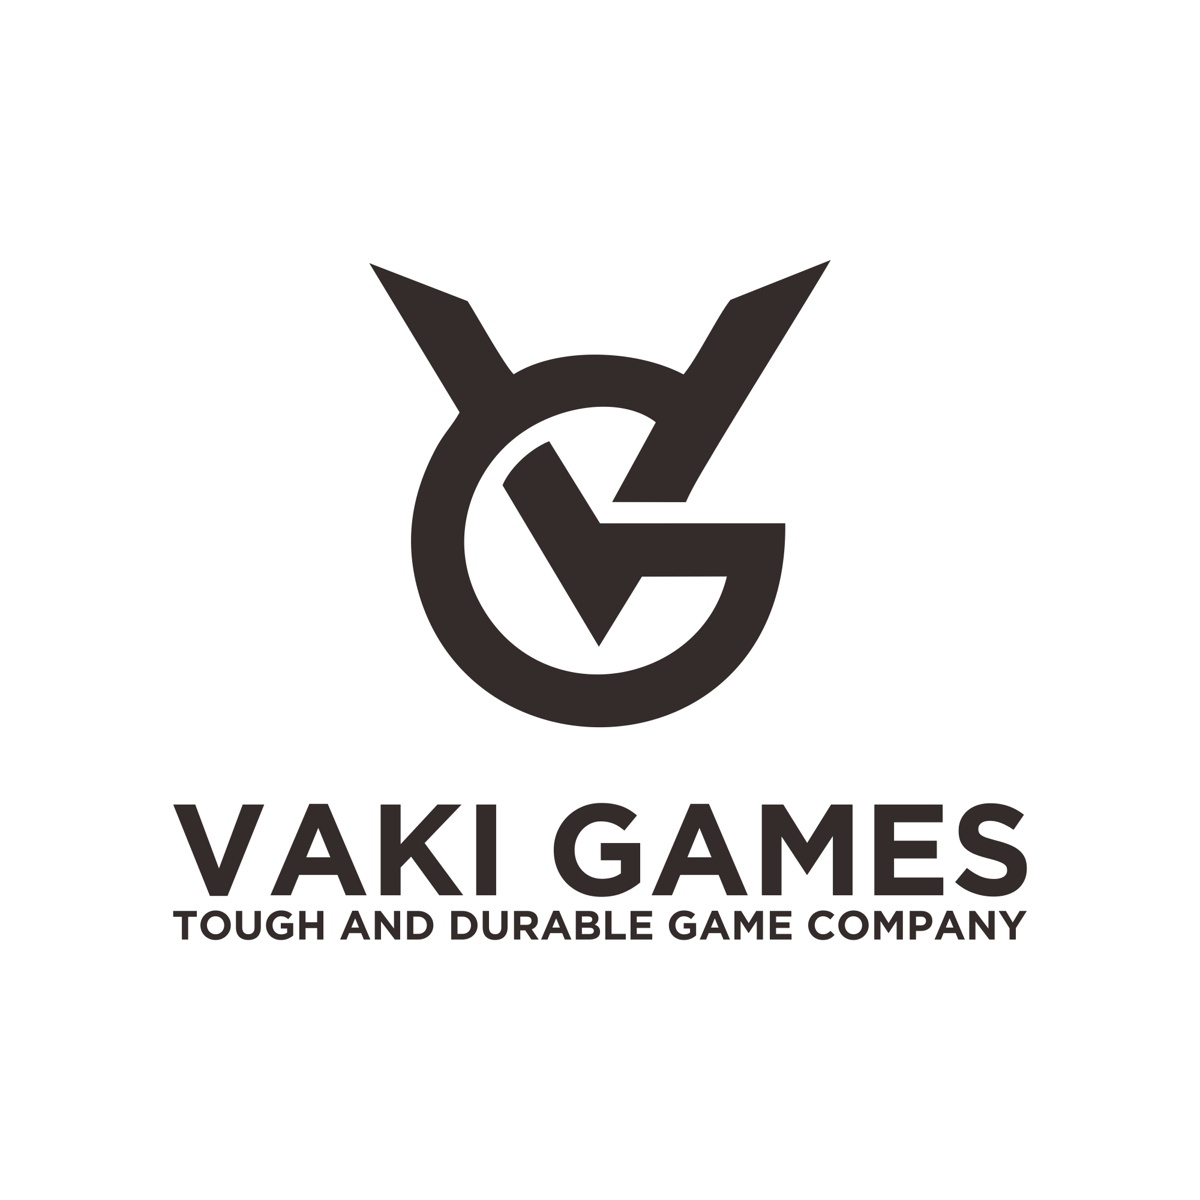 Vaki Games logo.png